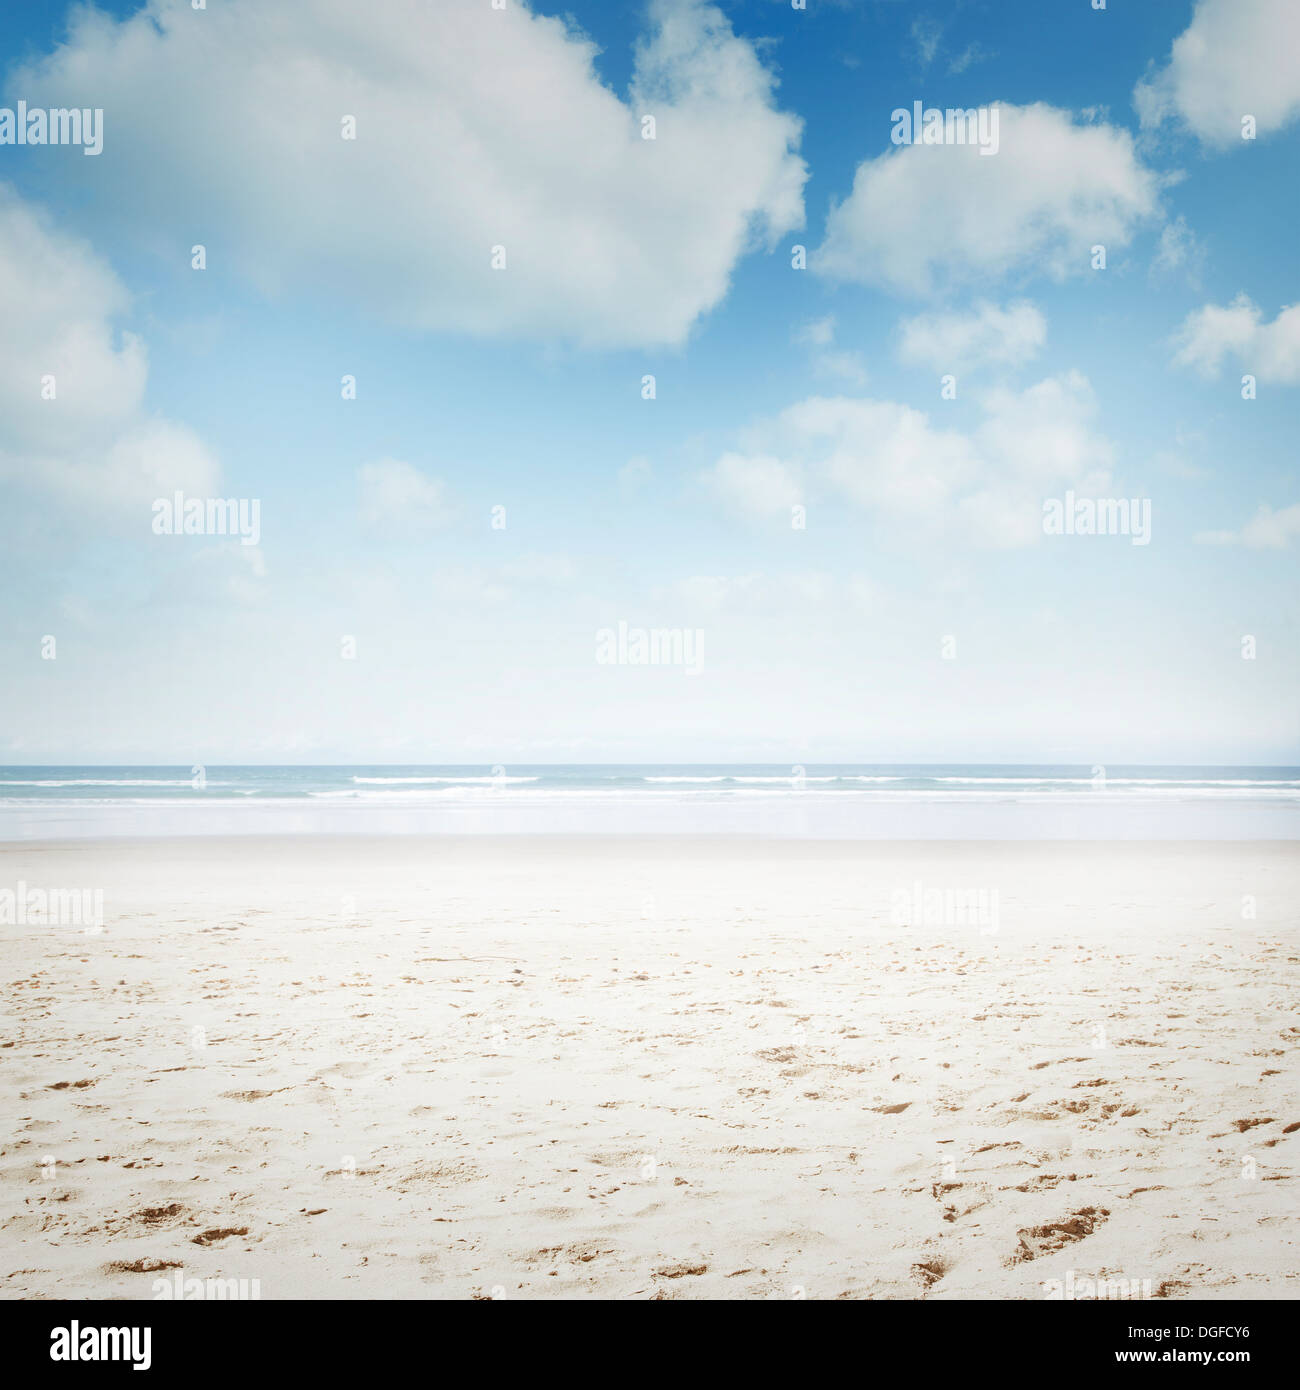 Sand, water and sky beach scenery Stock Photo